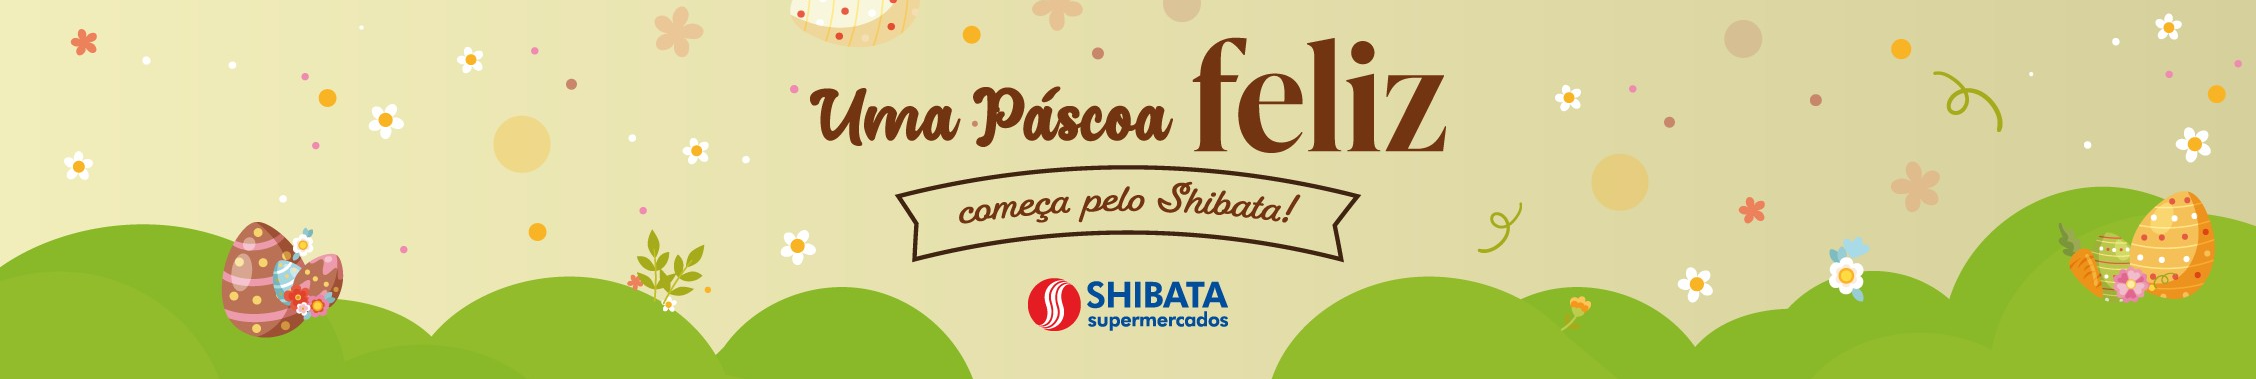 Shibata Supermercados background